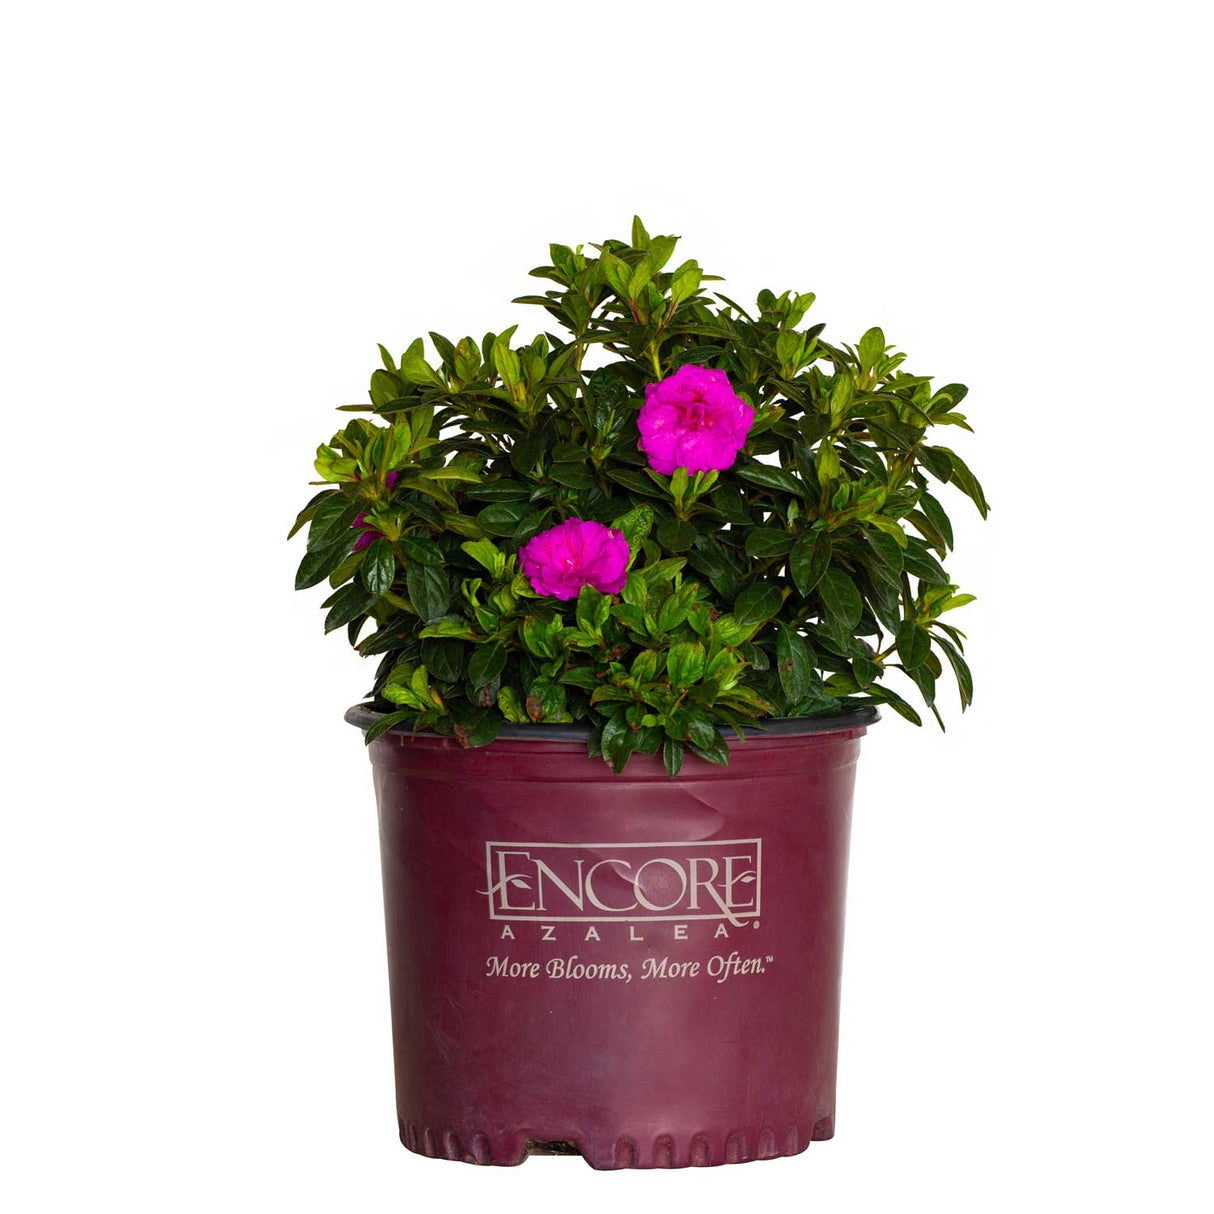 2 gallon encore azaleas for sale majesty in a 2 gallon pot evergreen foliage pink purple blooms